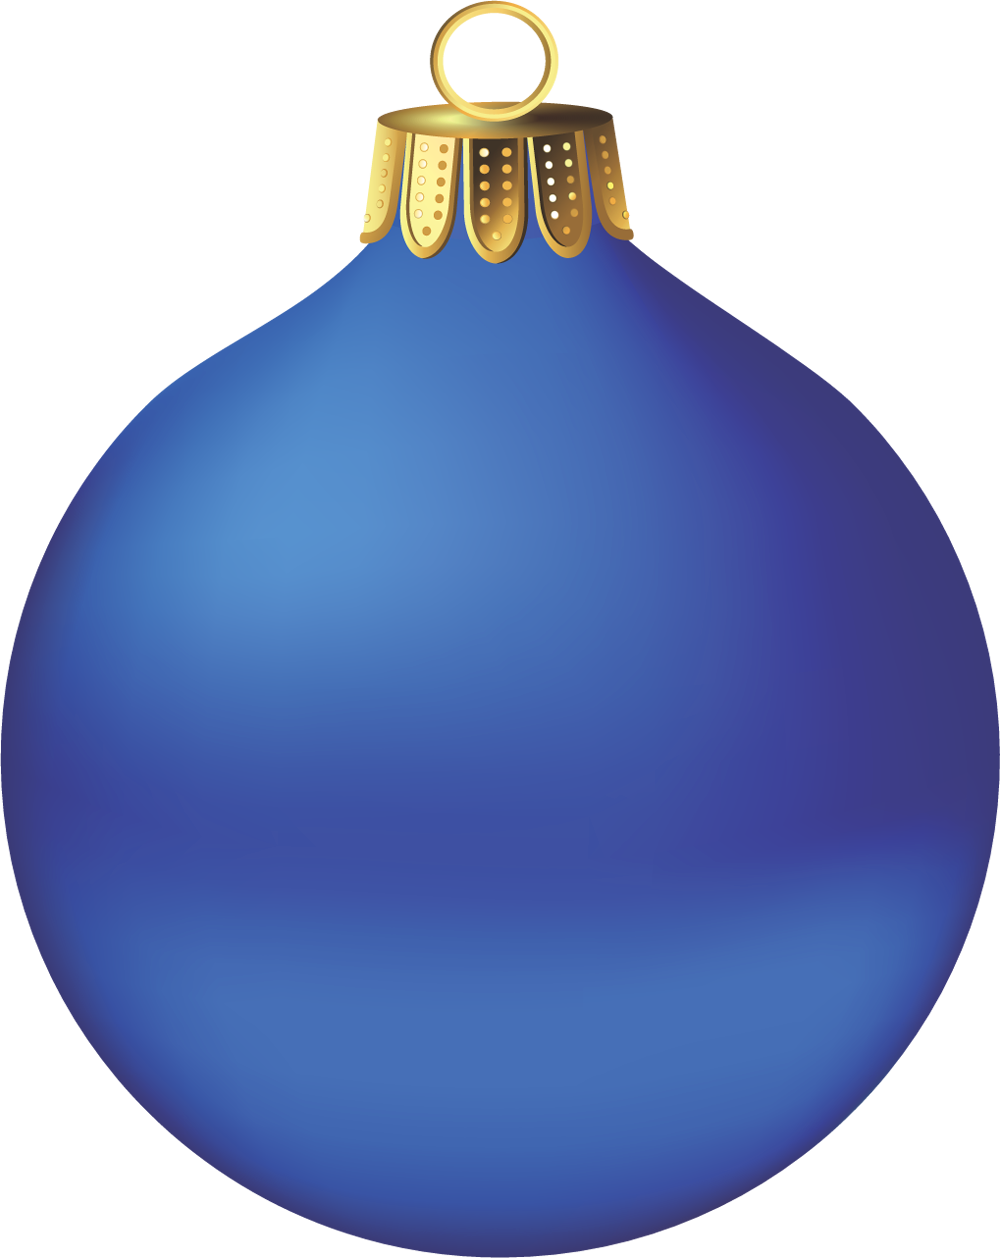 Christmas Ornament Clip Art C